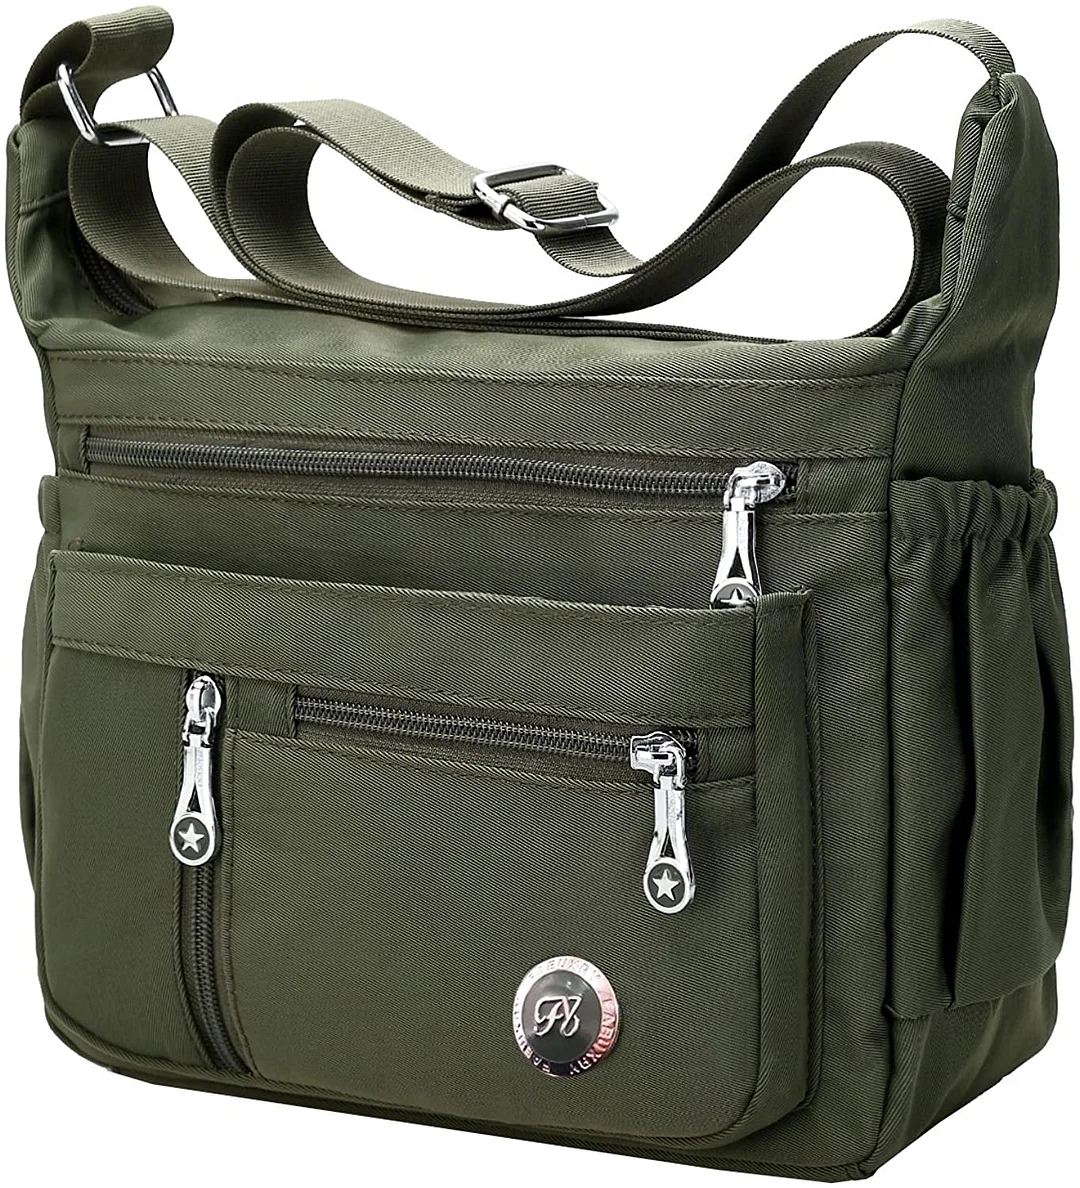 Purses and Shoulder Handbags for Women Crossbody Bag Messenger Bags